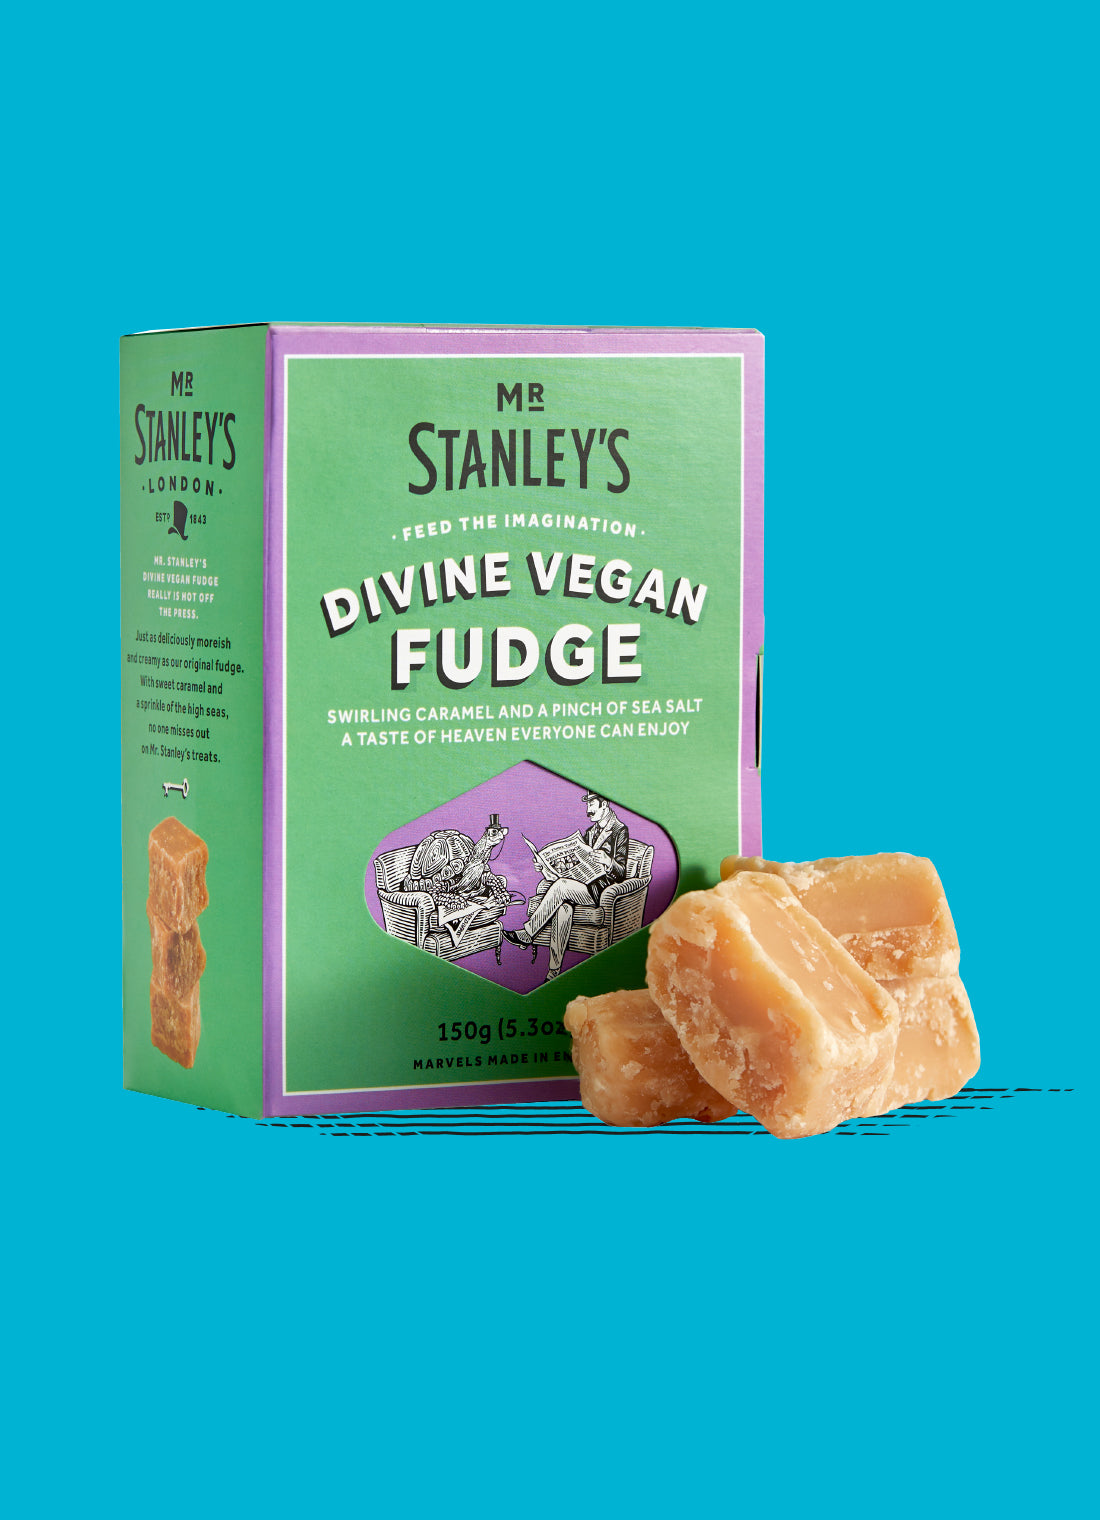 Introducing NEW Mr. Stanley's Divine Vegan Fudge